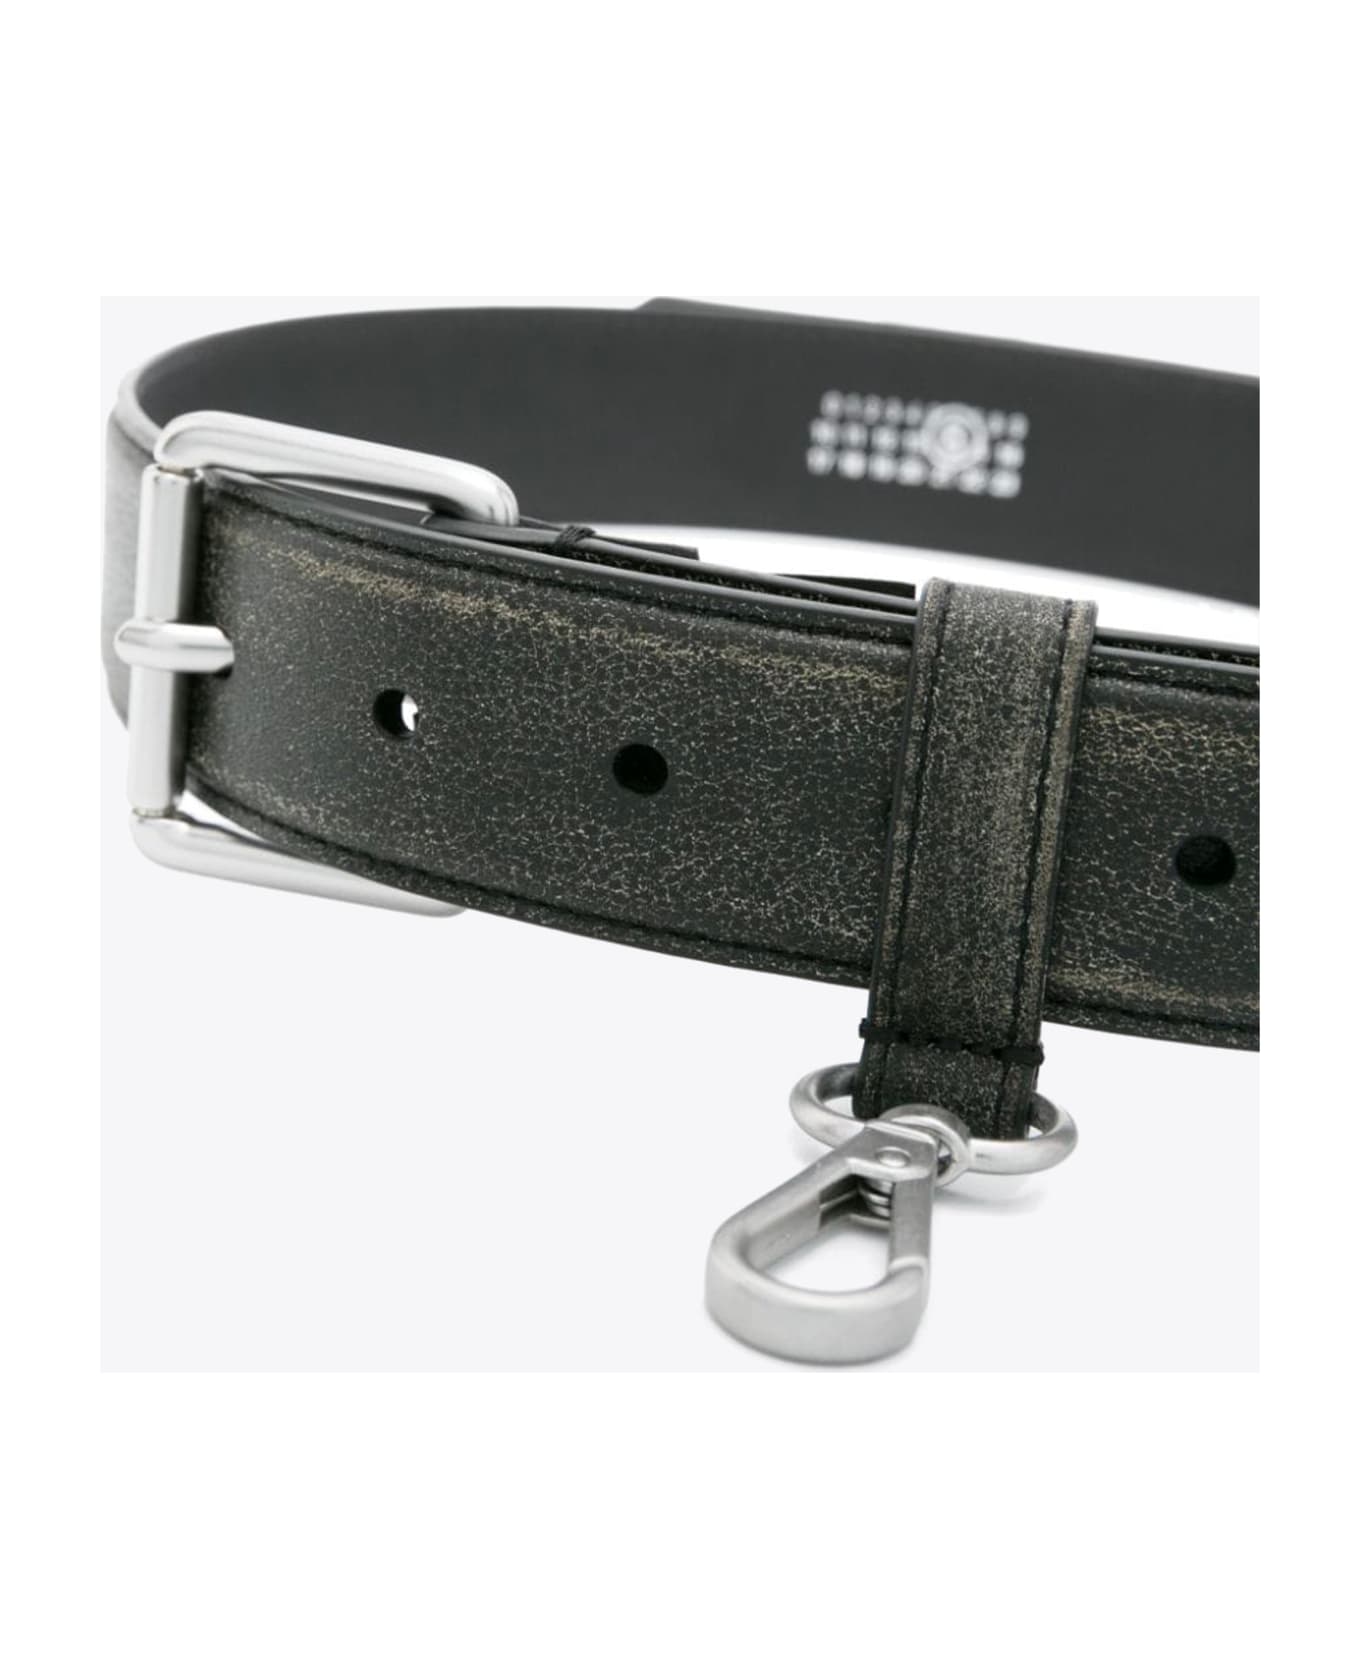 MM6 Maison Margiela Cintura Distressed black leather belt with snap-hook - Tortora name:456